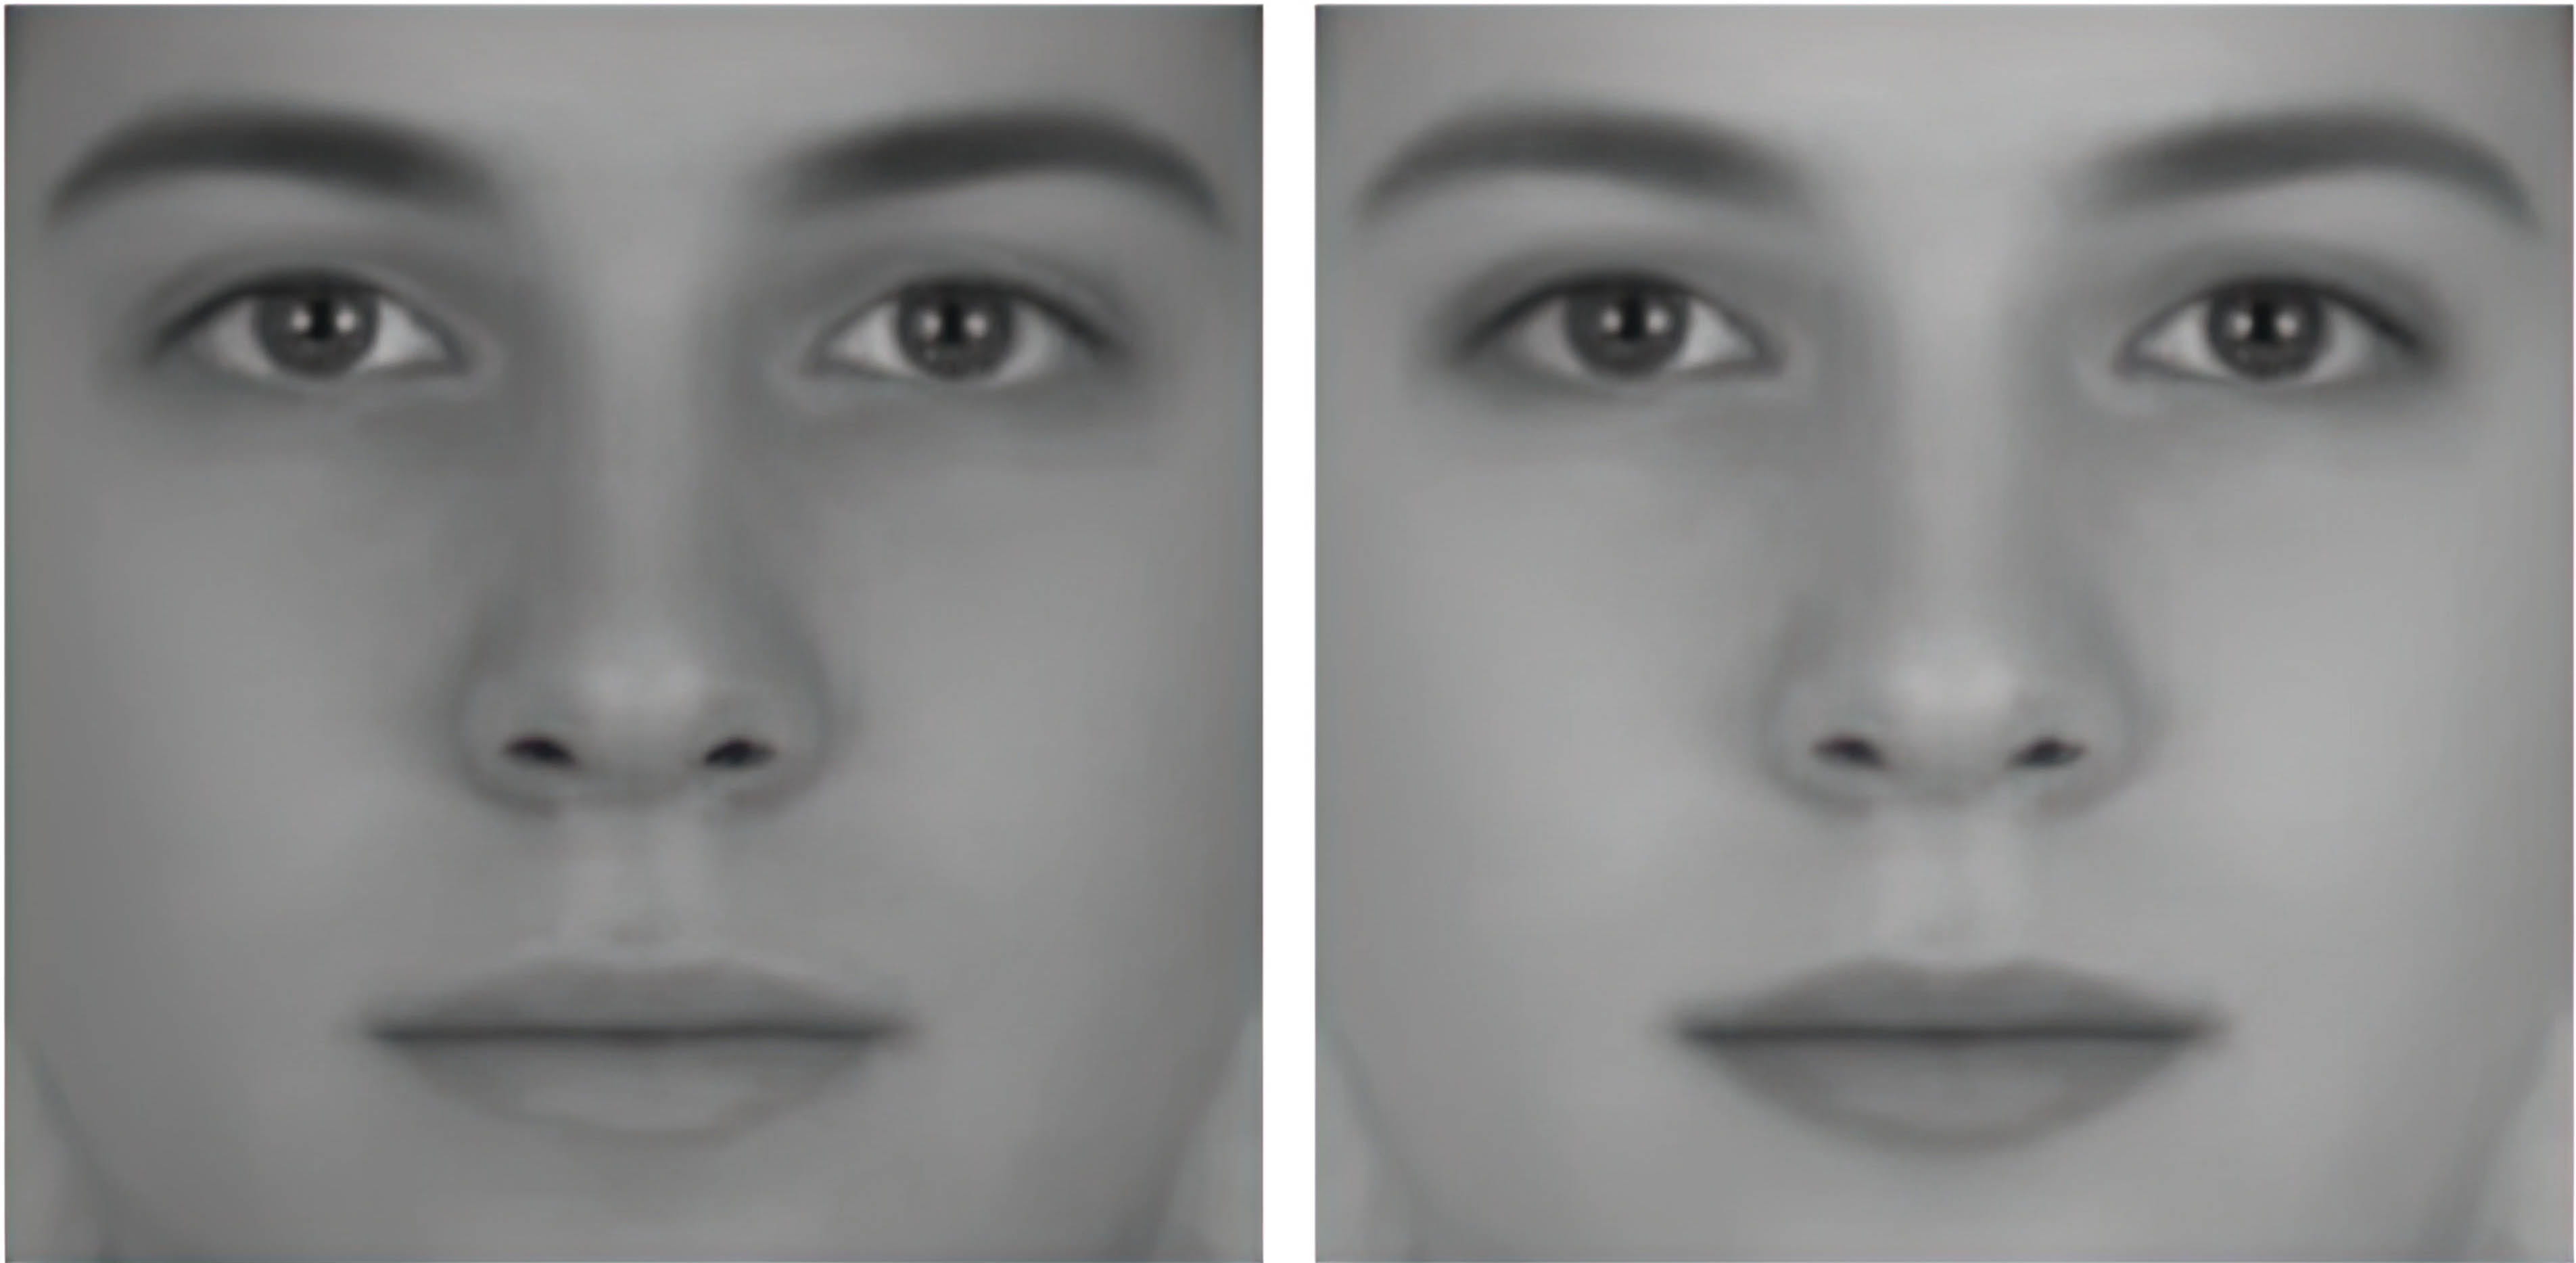 Comparison of two faces